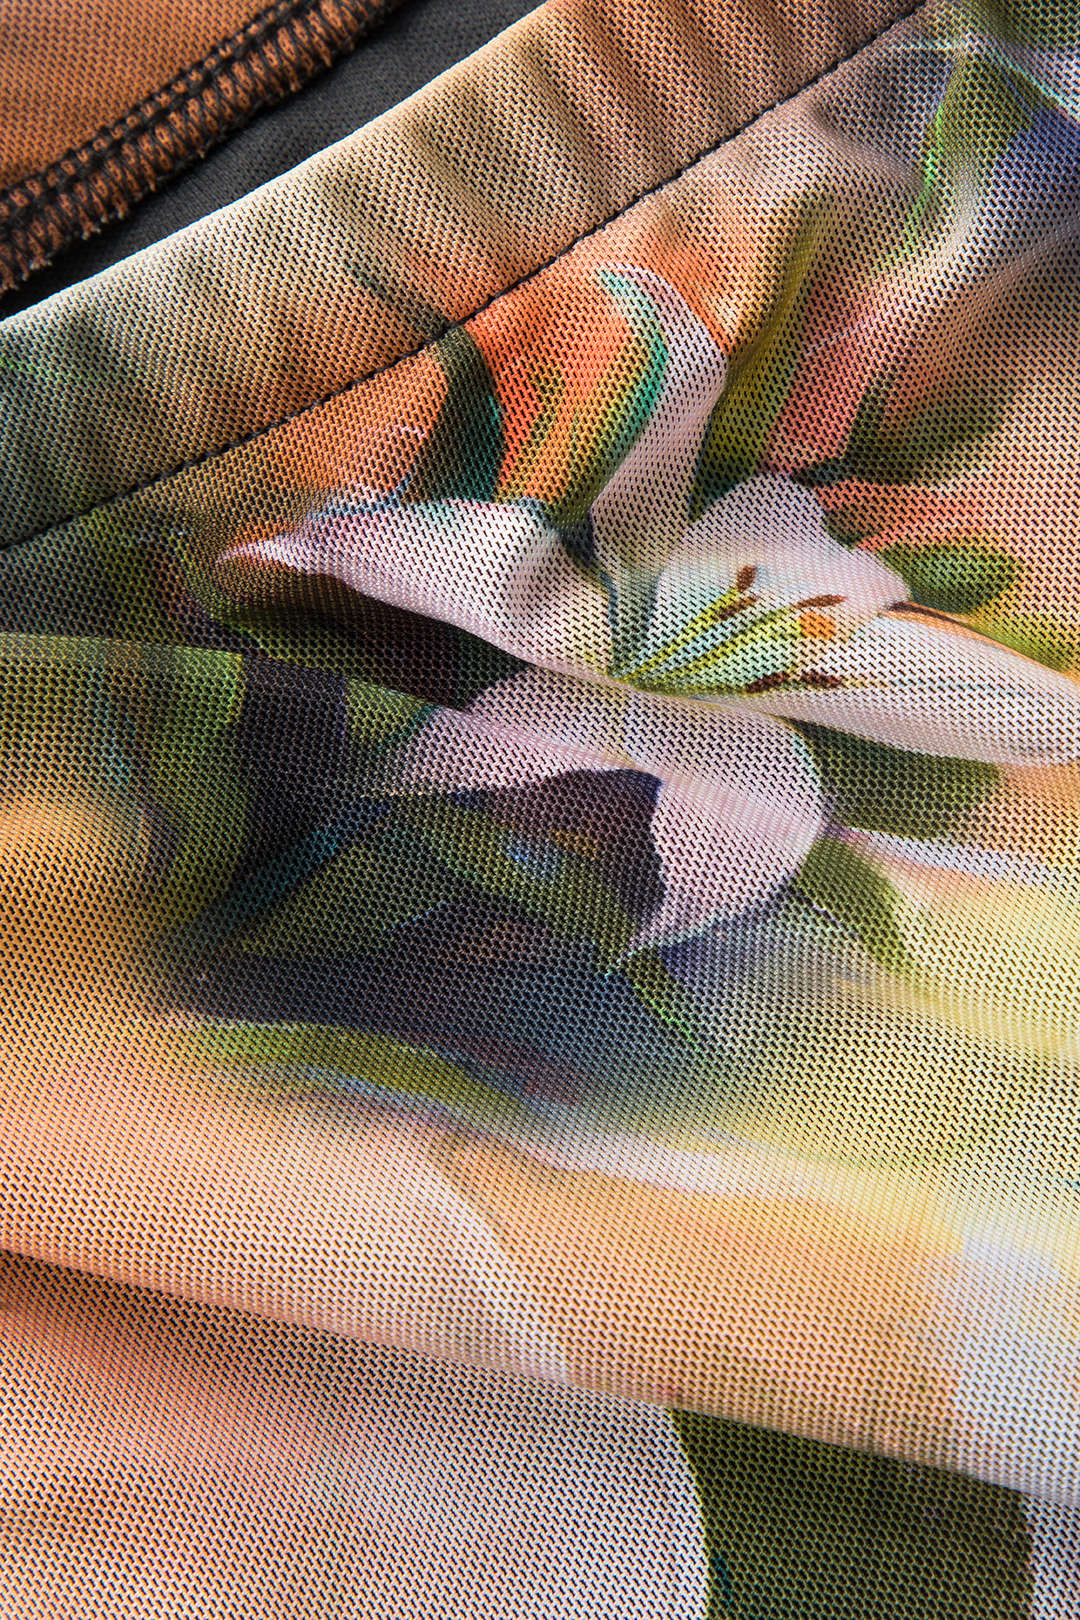 Floral Print Mesh Maxi Skirt